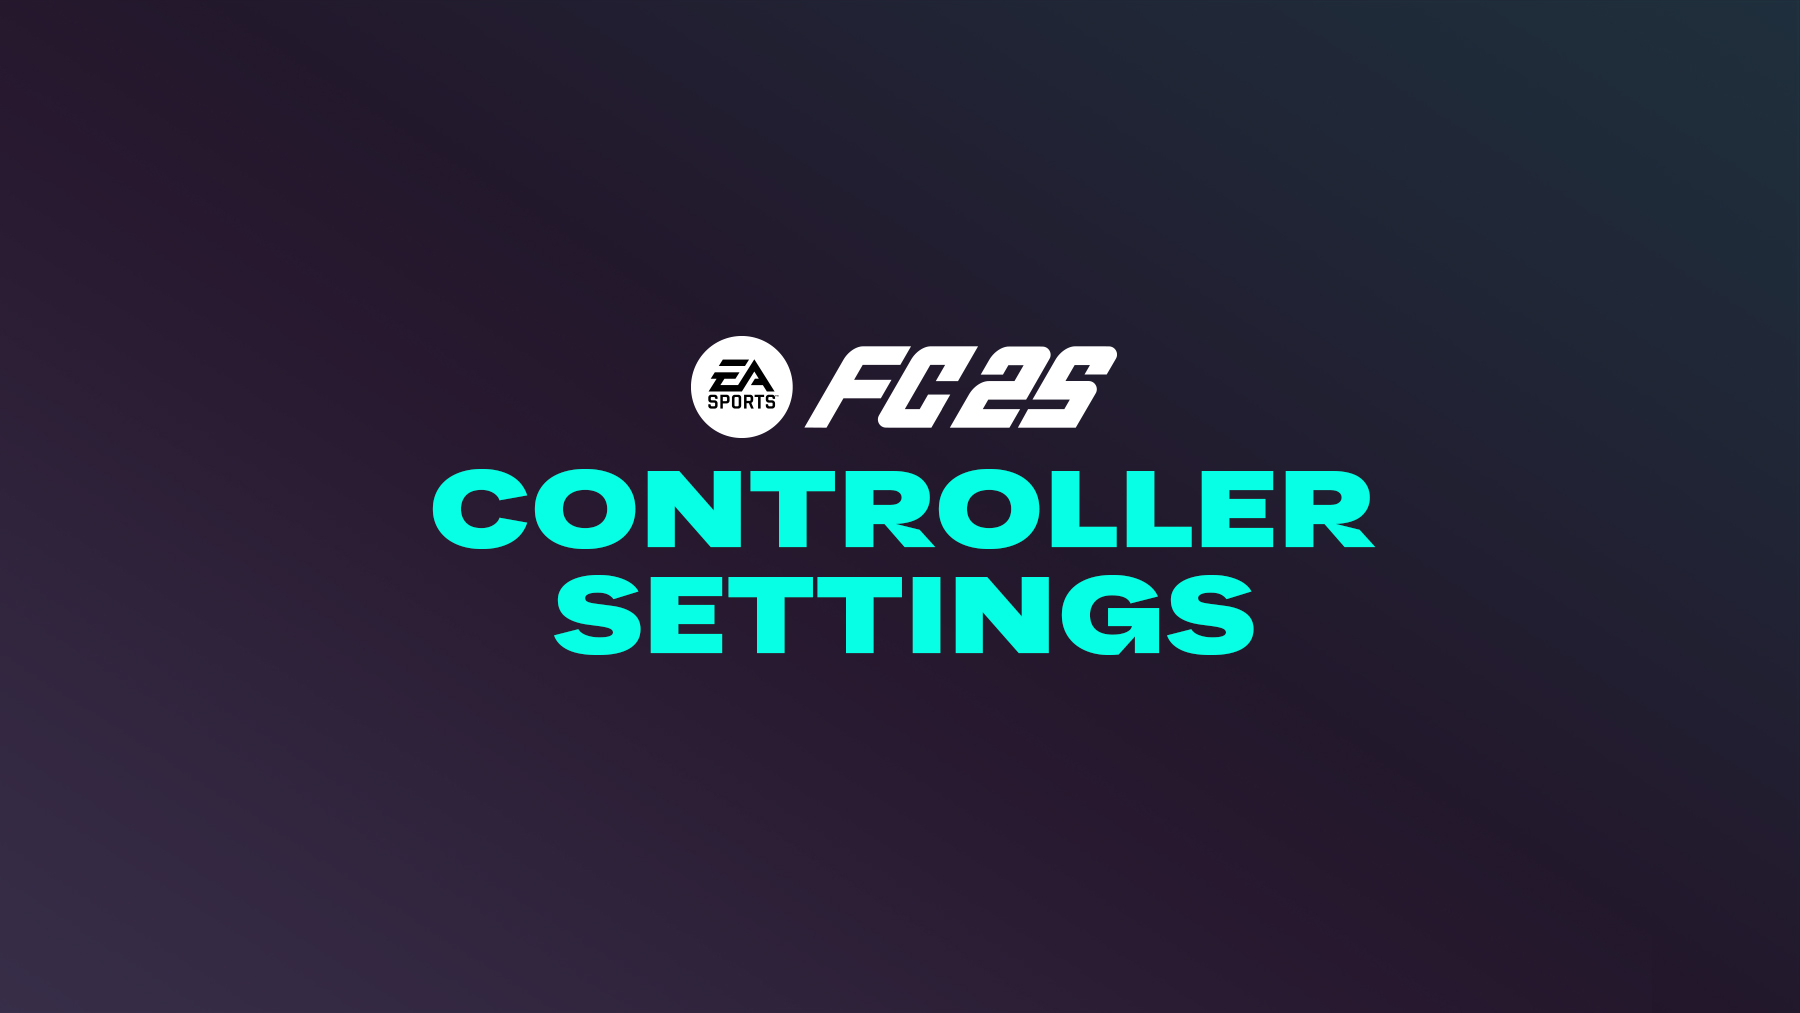 FC 25 Controller Settings